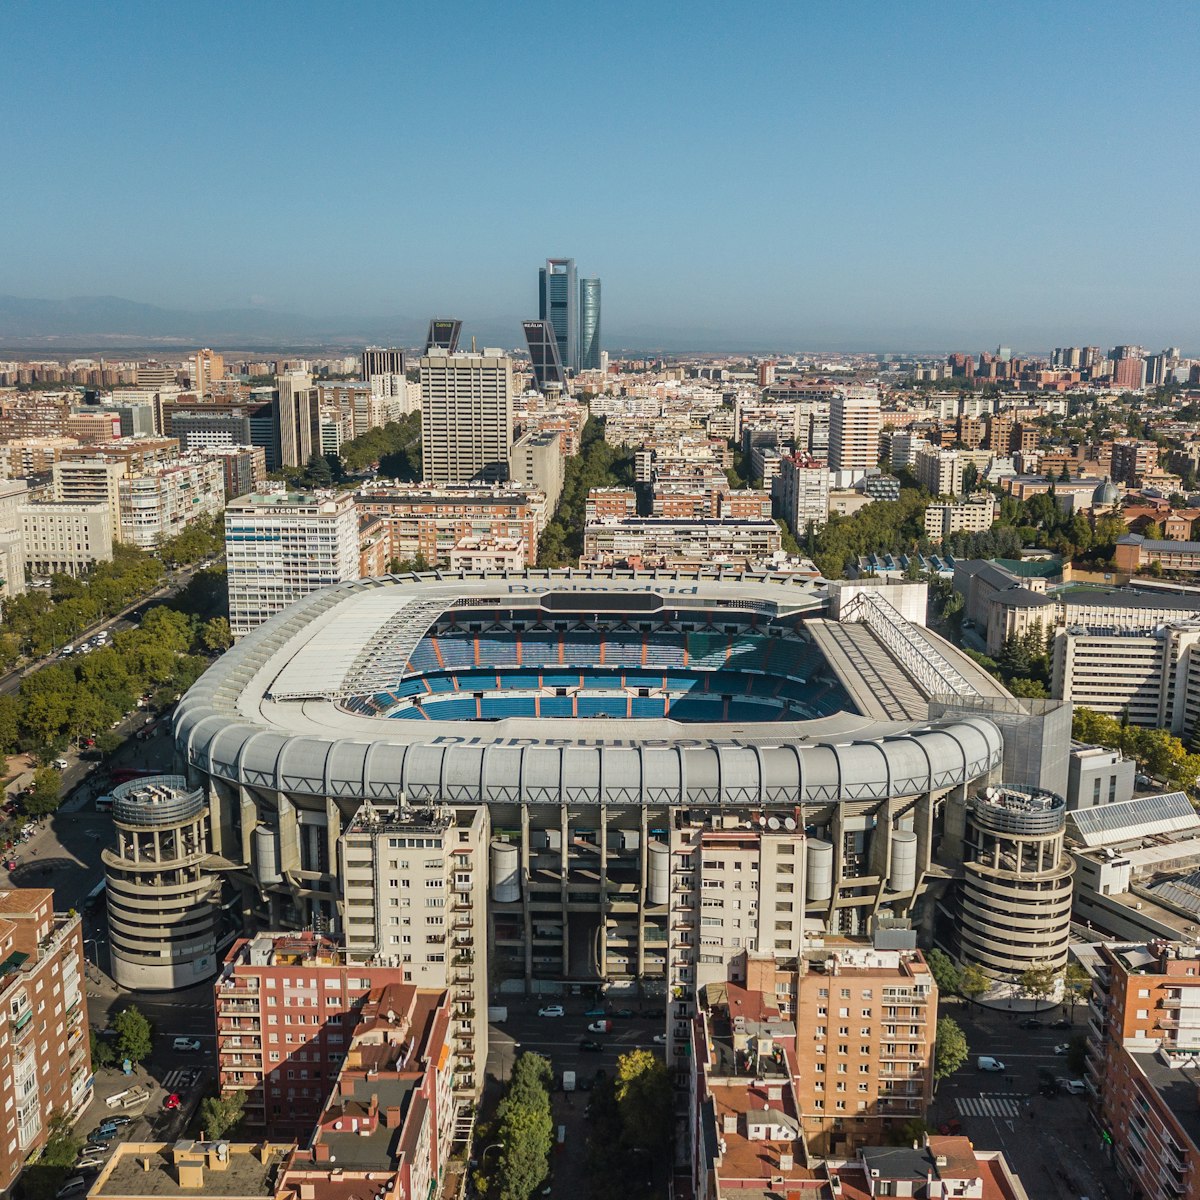 Aerial view of Santiago Bernabeu stadium in Madrid